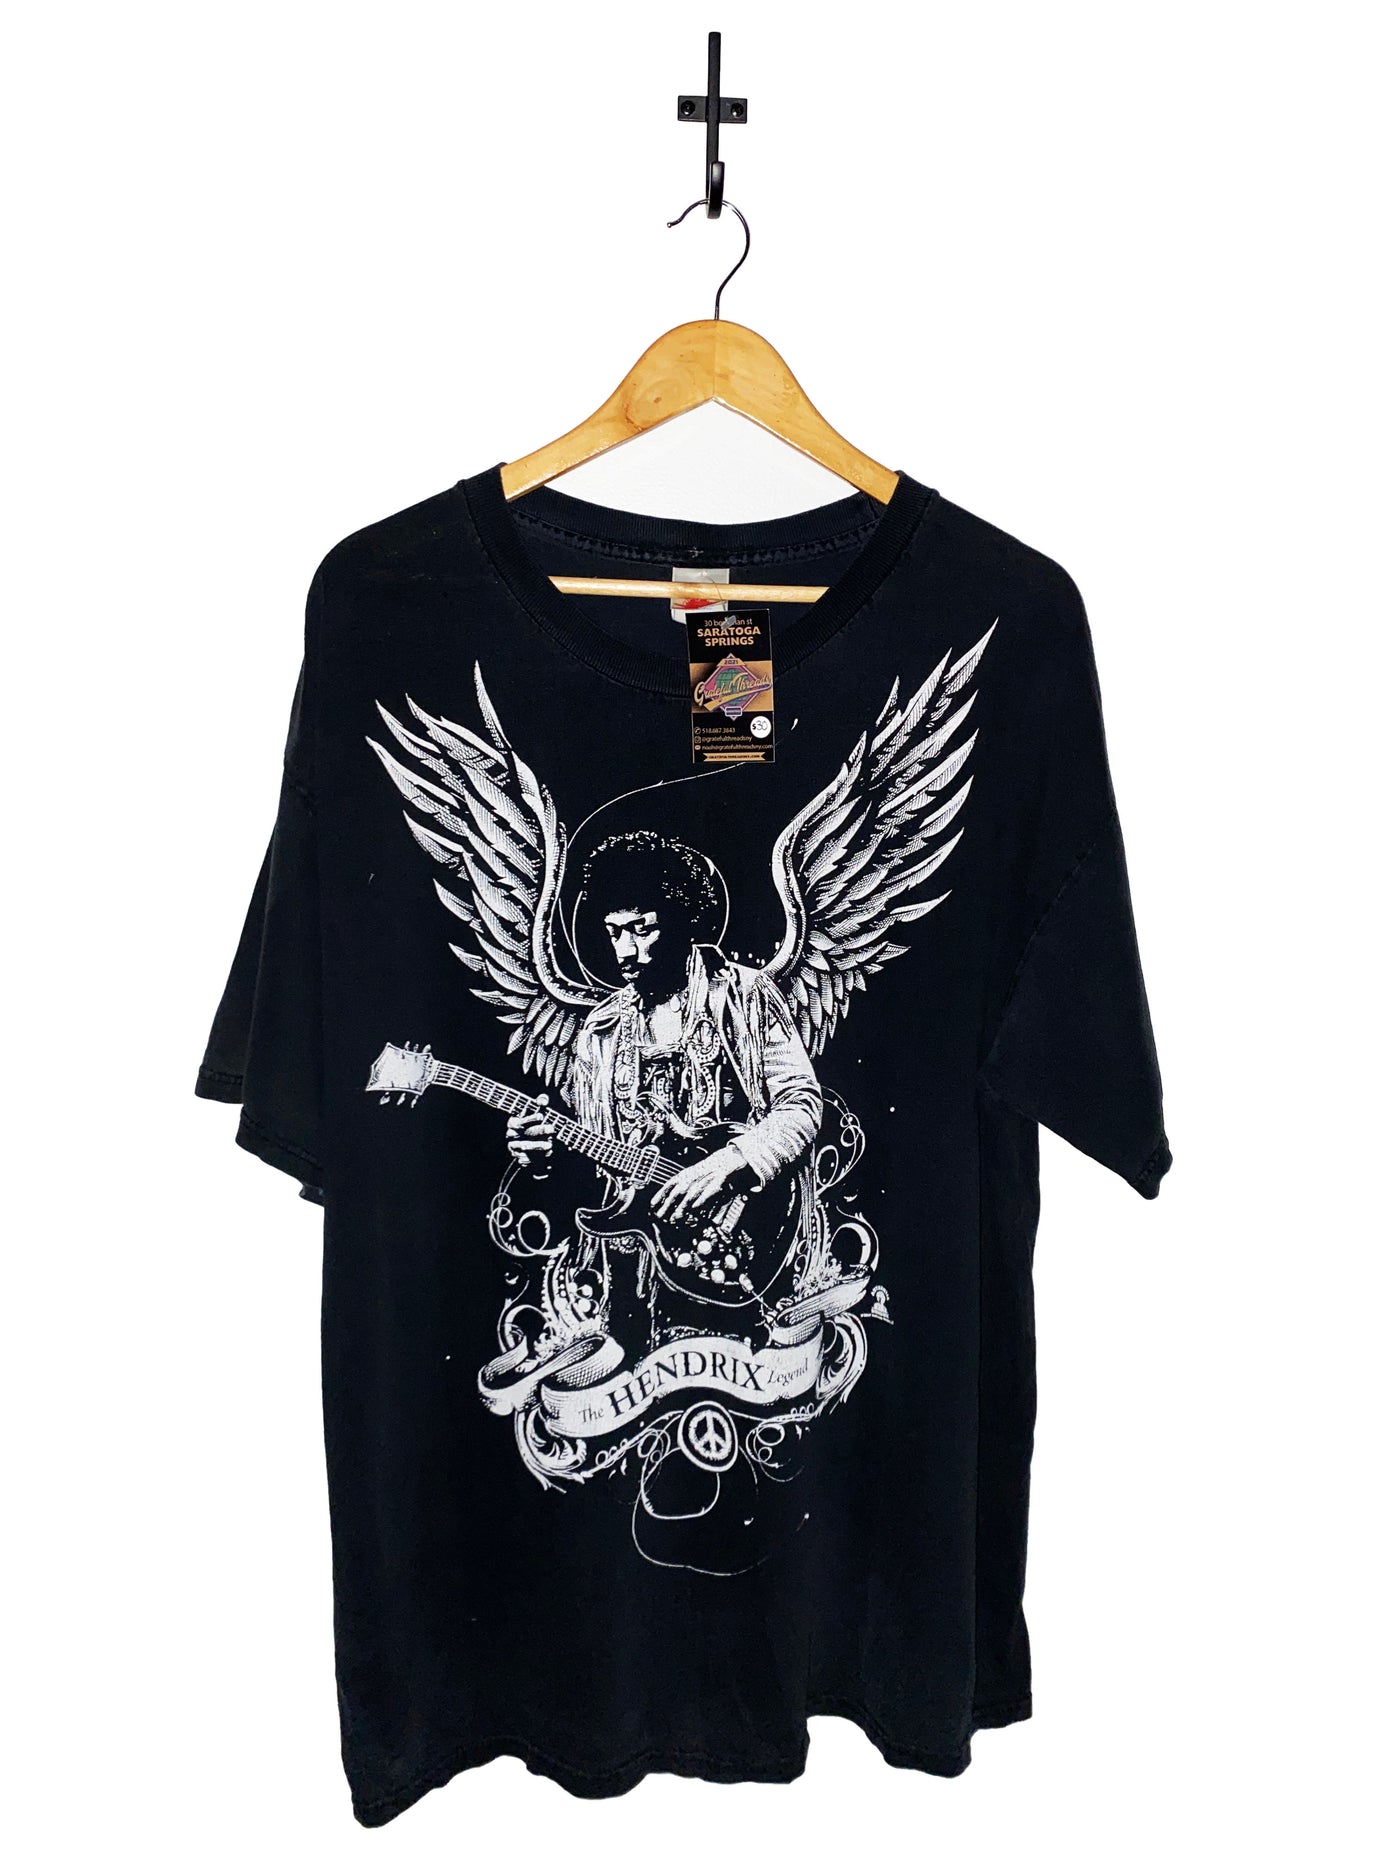 2007 Hendrix T-Shirt